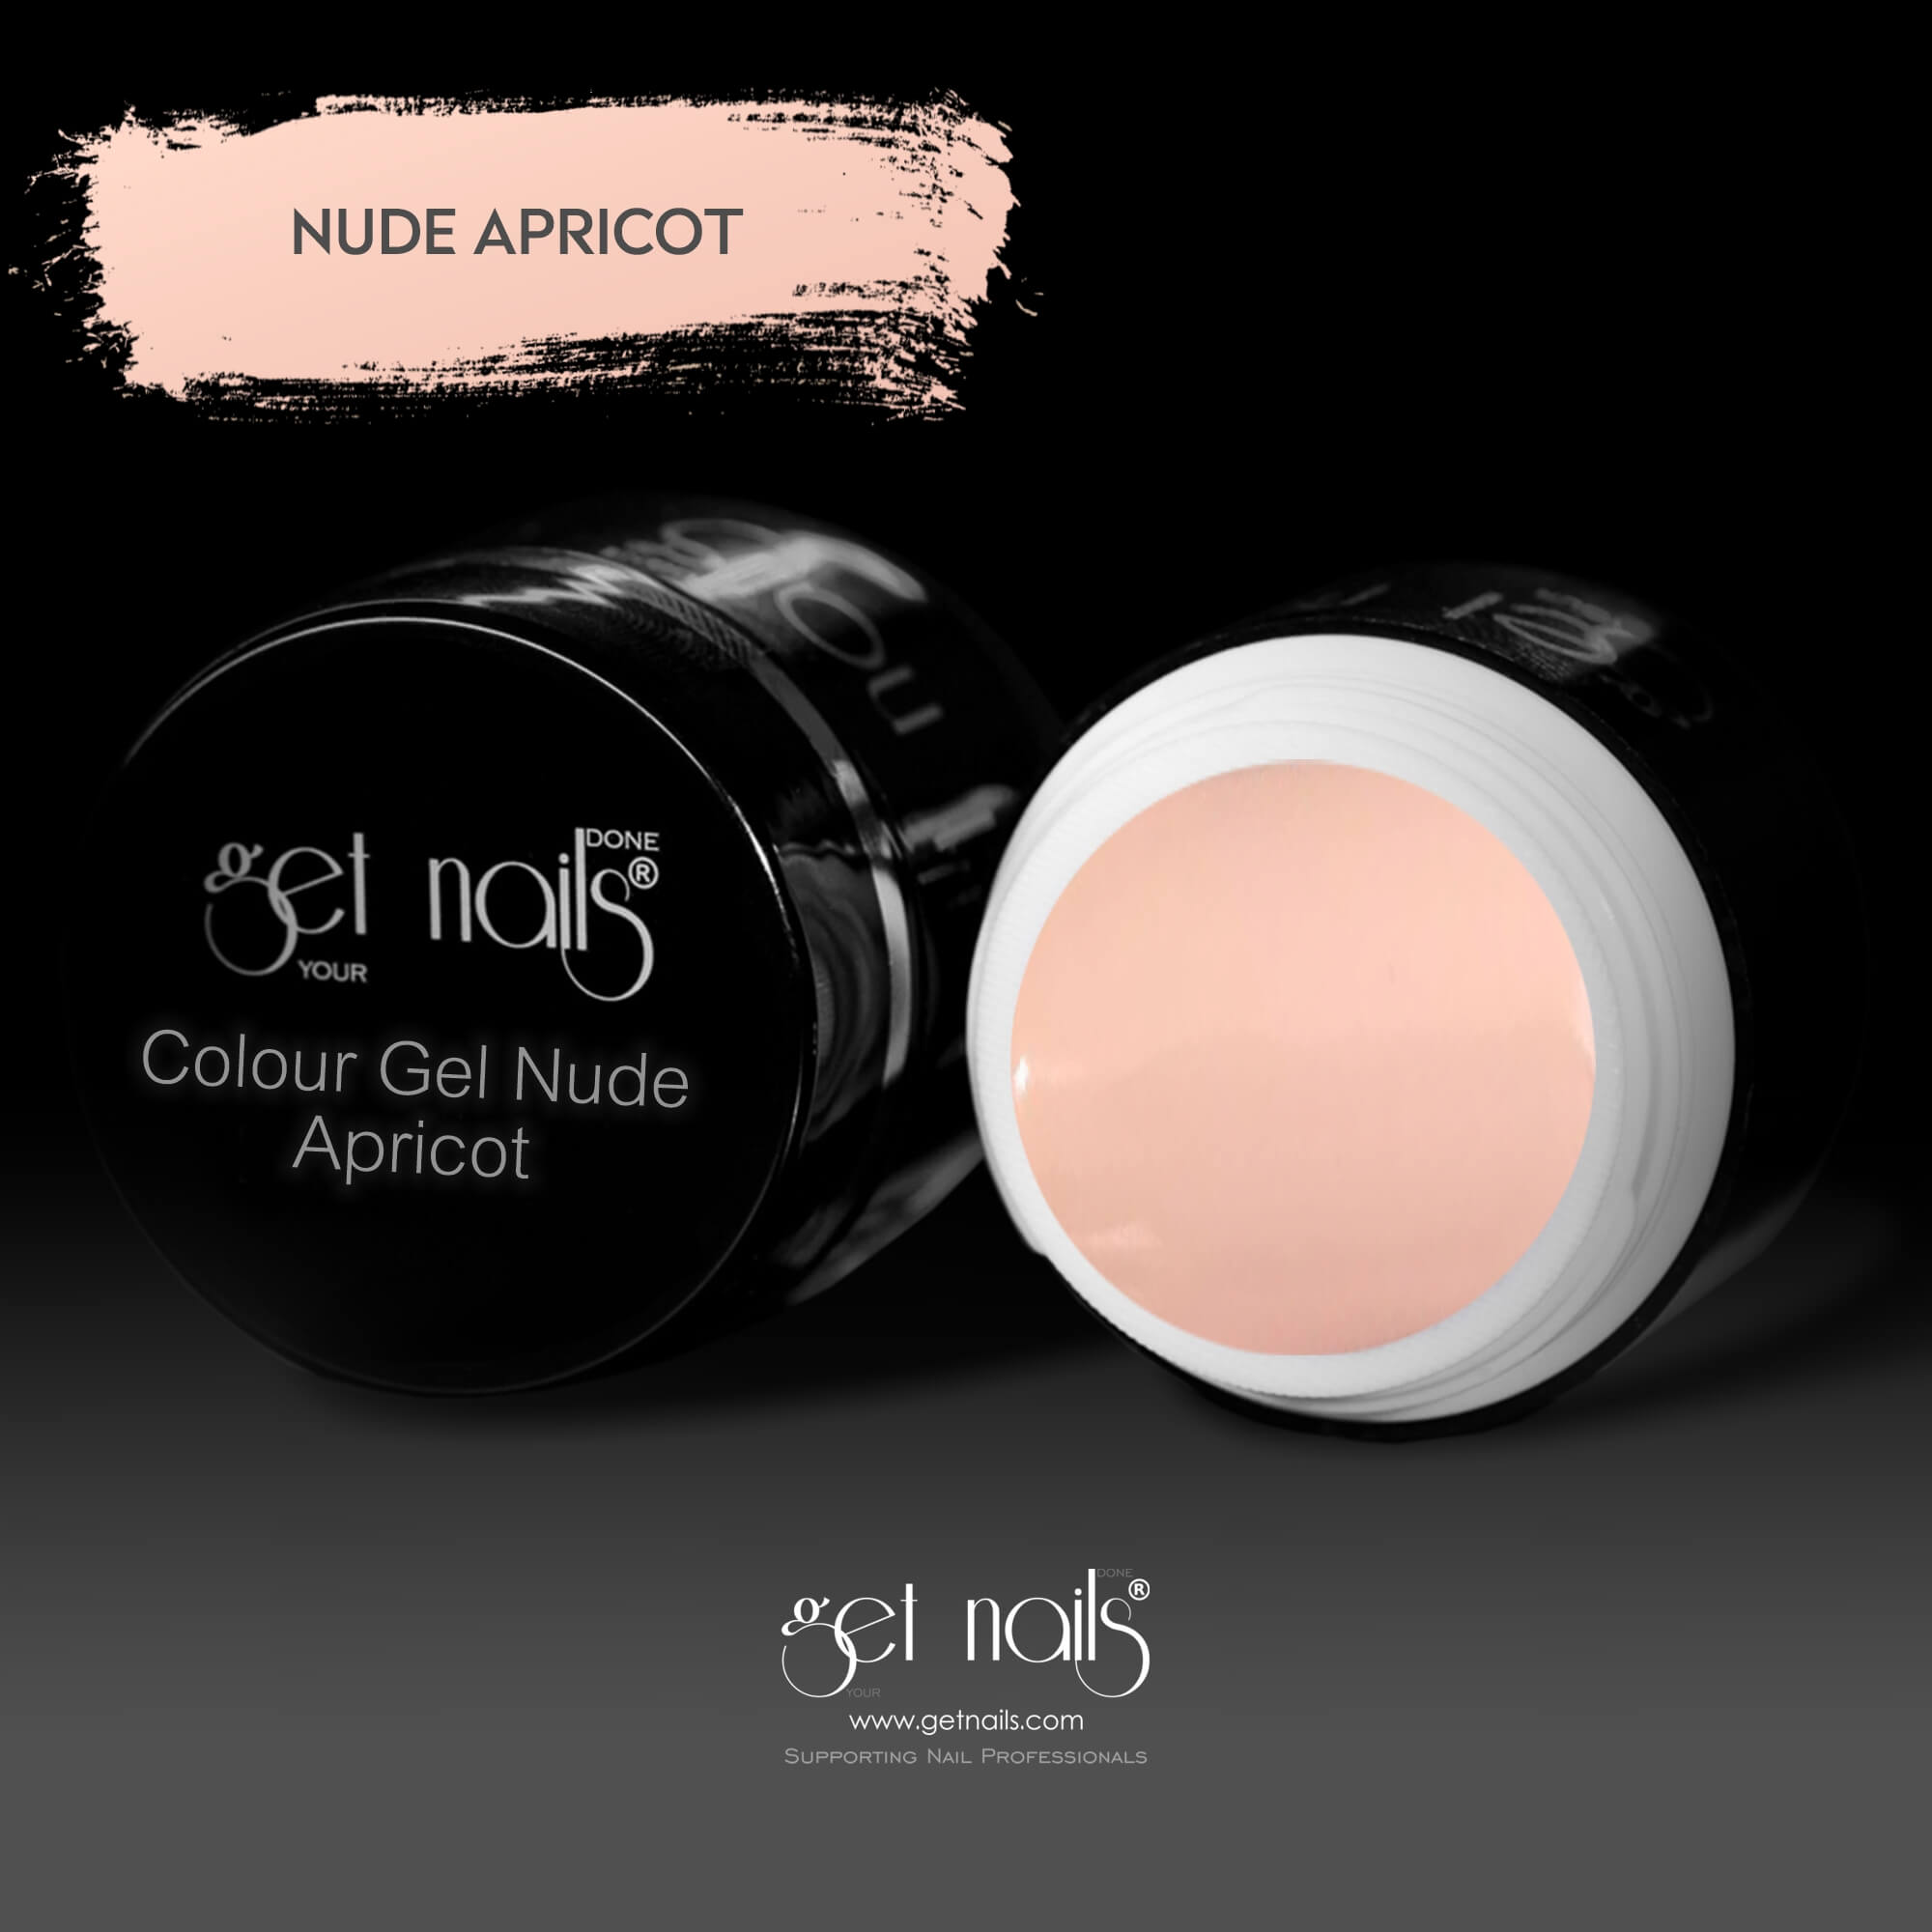 Get Nails Austria - Цветной гель Nude Apricot 5g